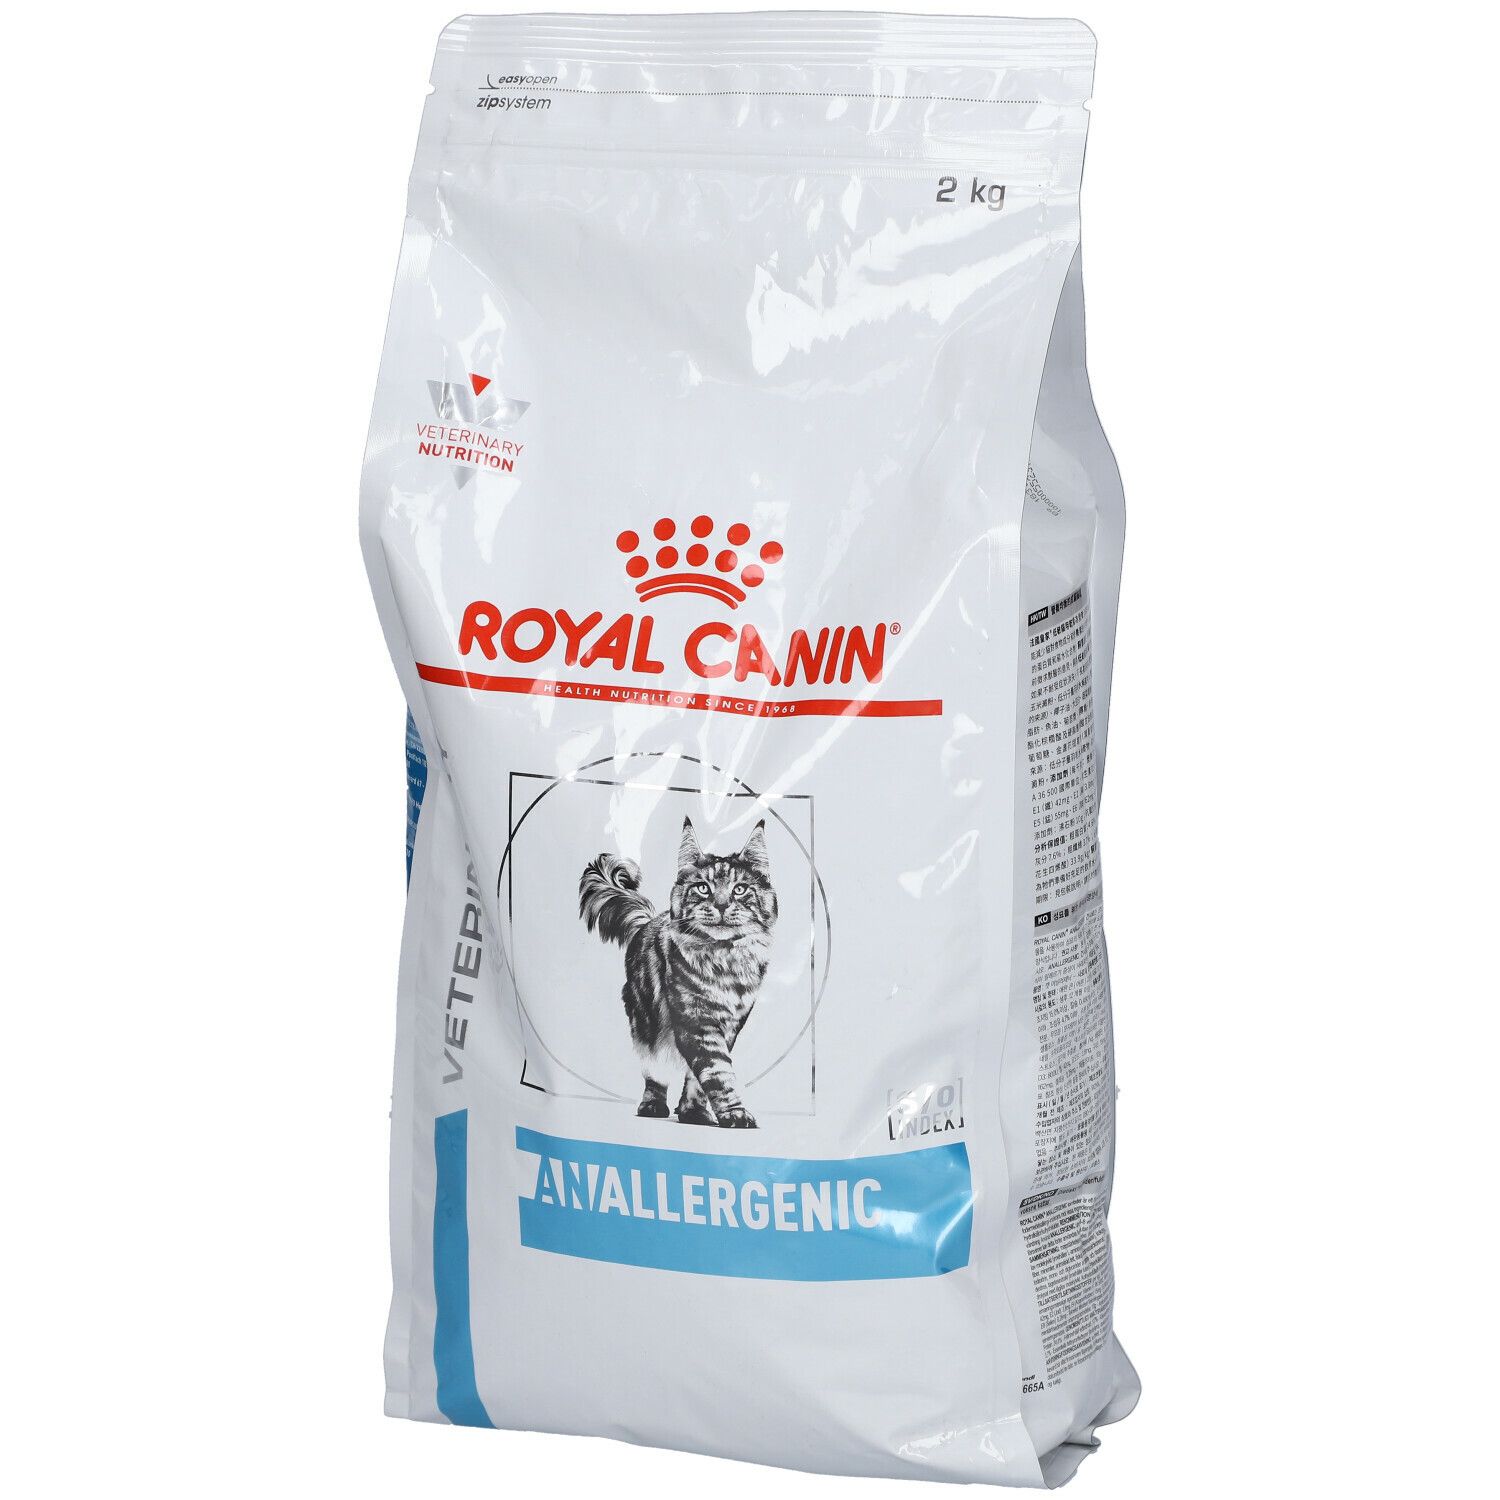 Royal Canin® Anallergenic